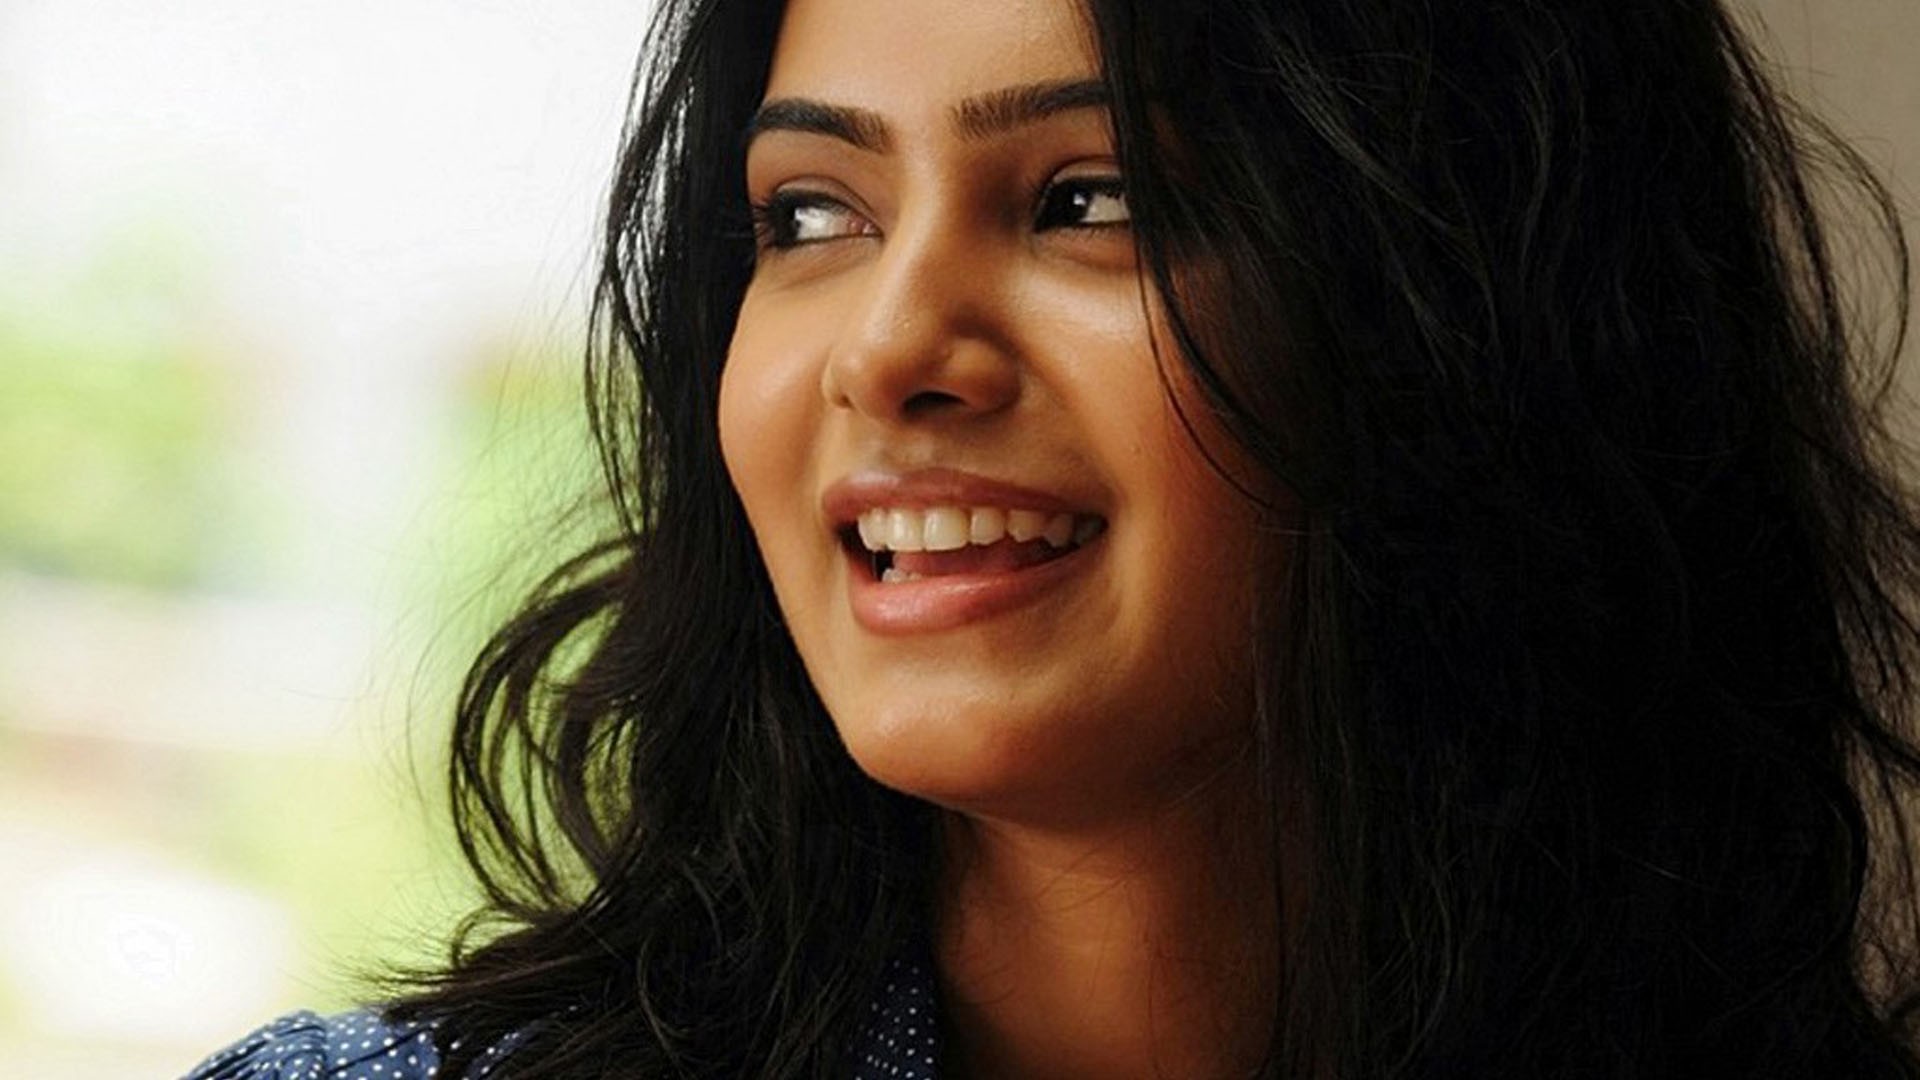 Women Actress Wallpaper Smiling Indian